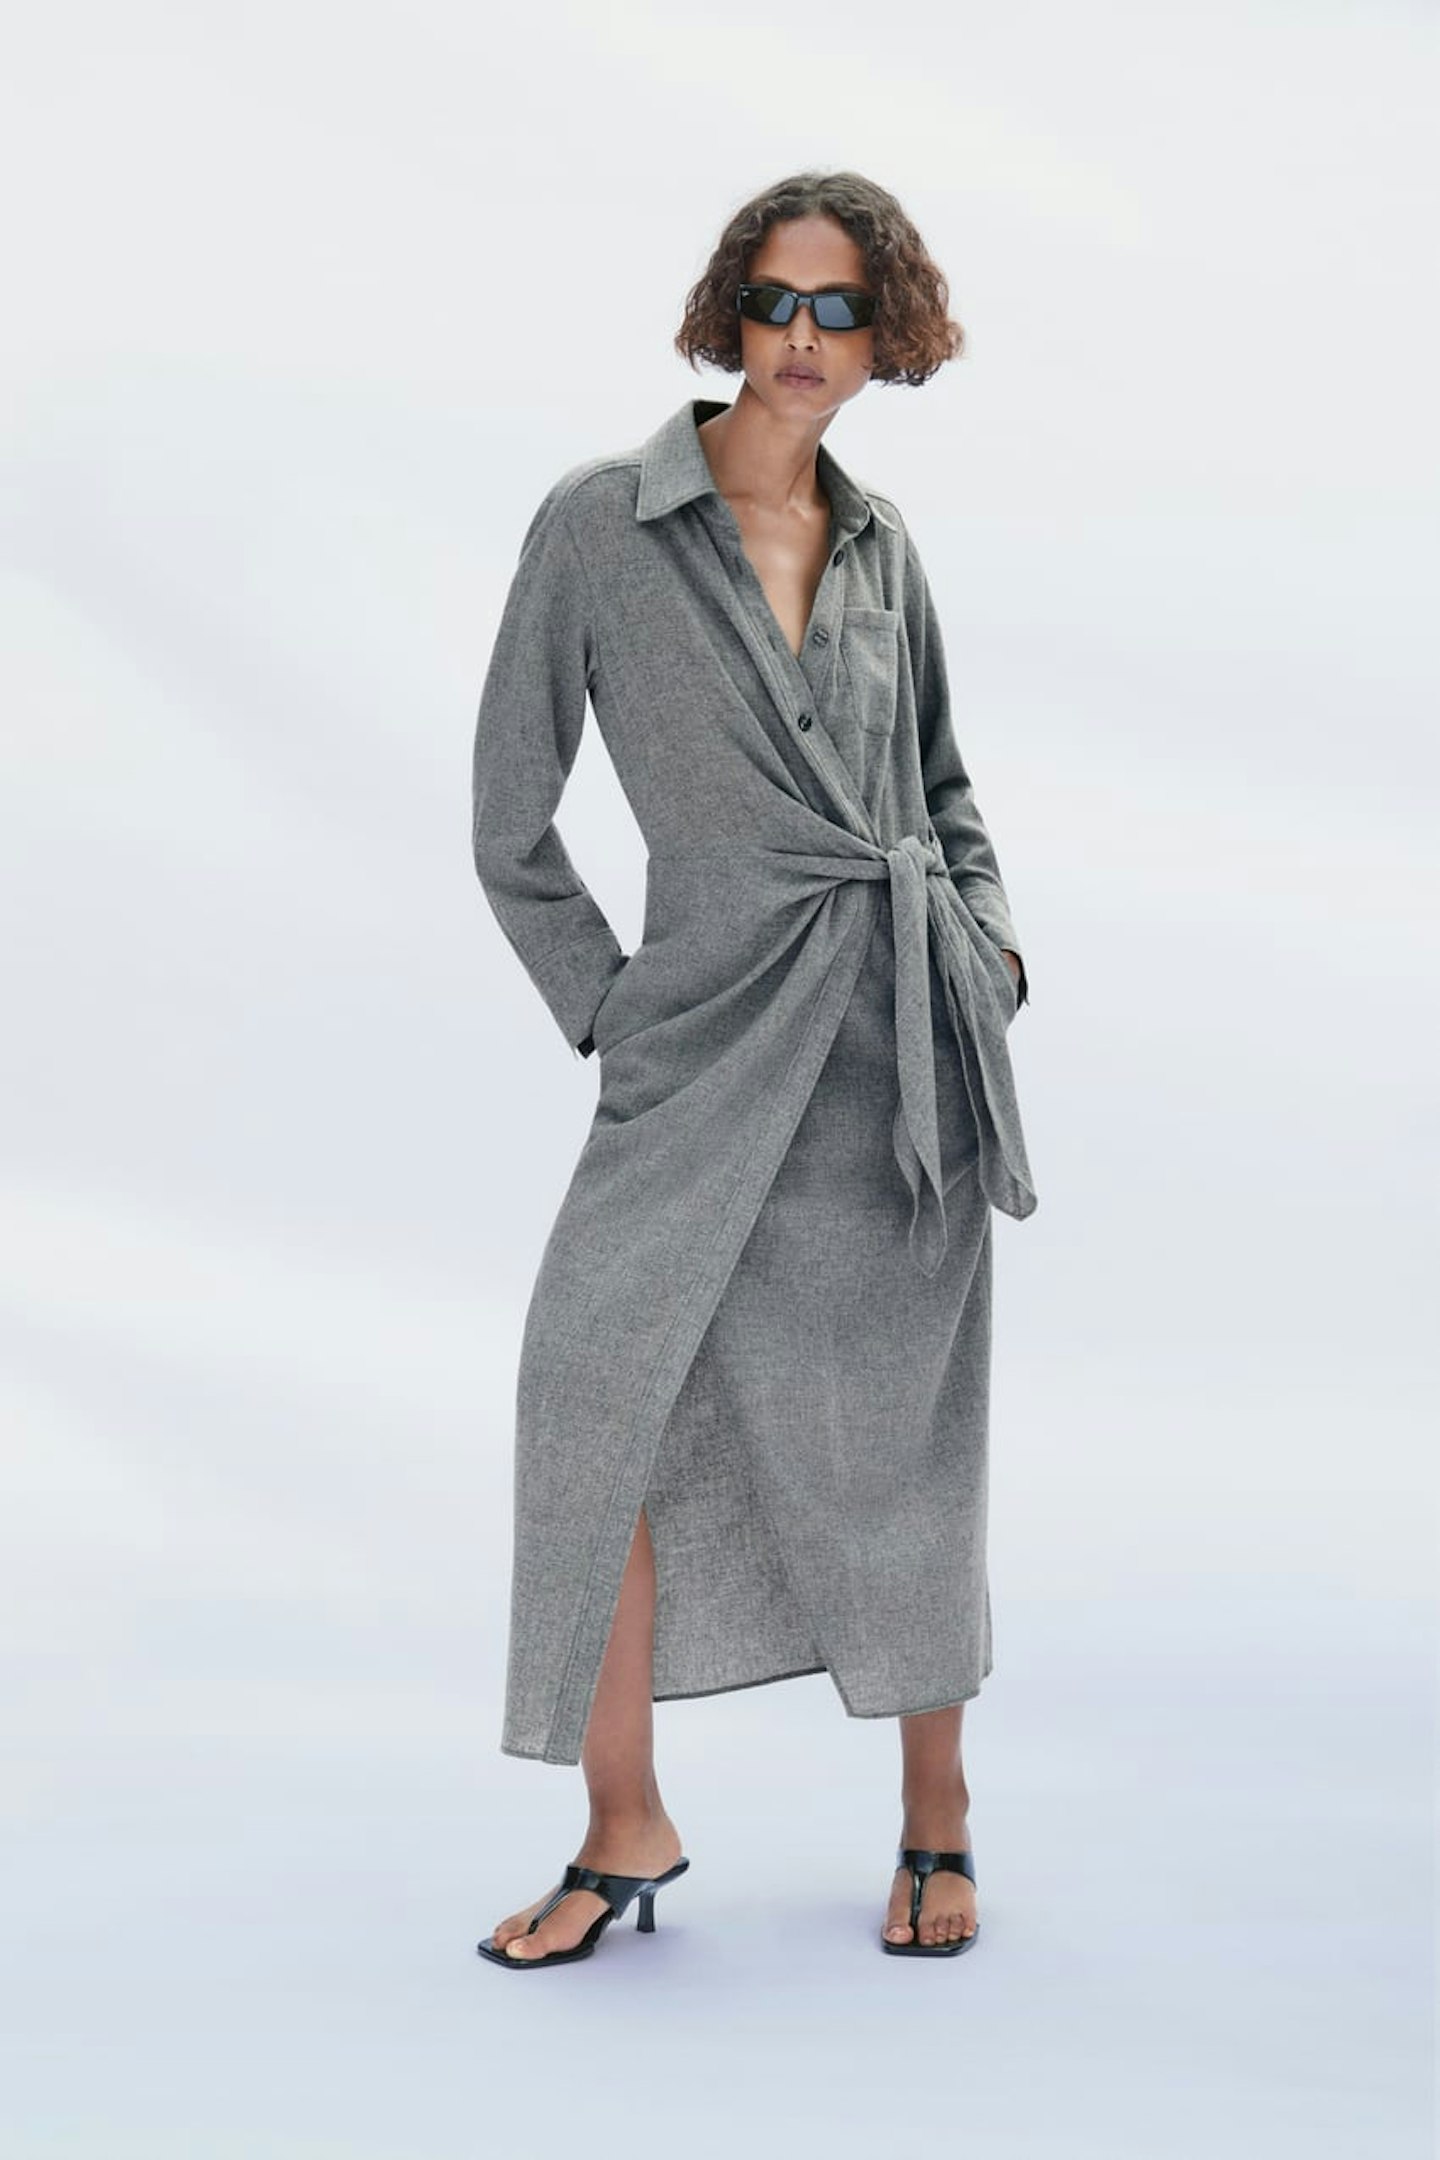 Zara, Knotted Dress, £59.99